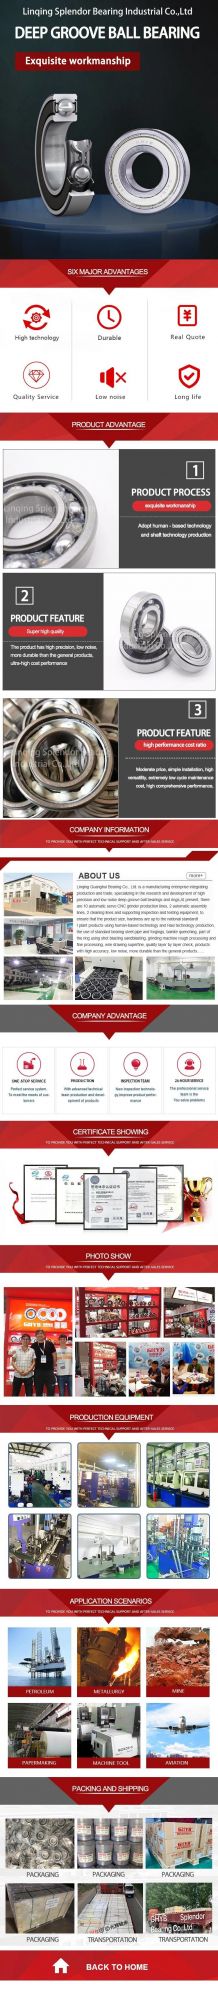 China Factory Distributor Supplier of Deep Groove Ball Bearings for Motors, Compressors, Alternators 6203-2rz/P6/Z2V2